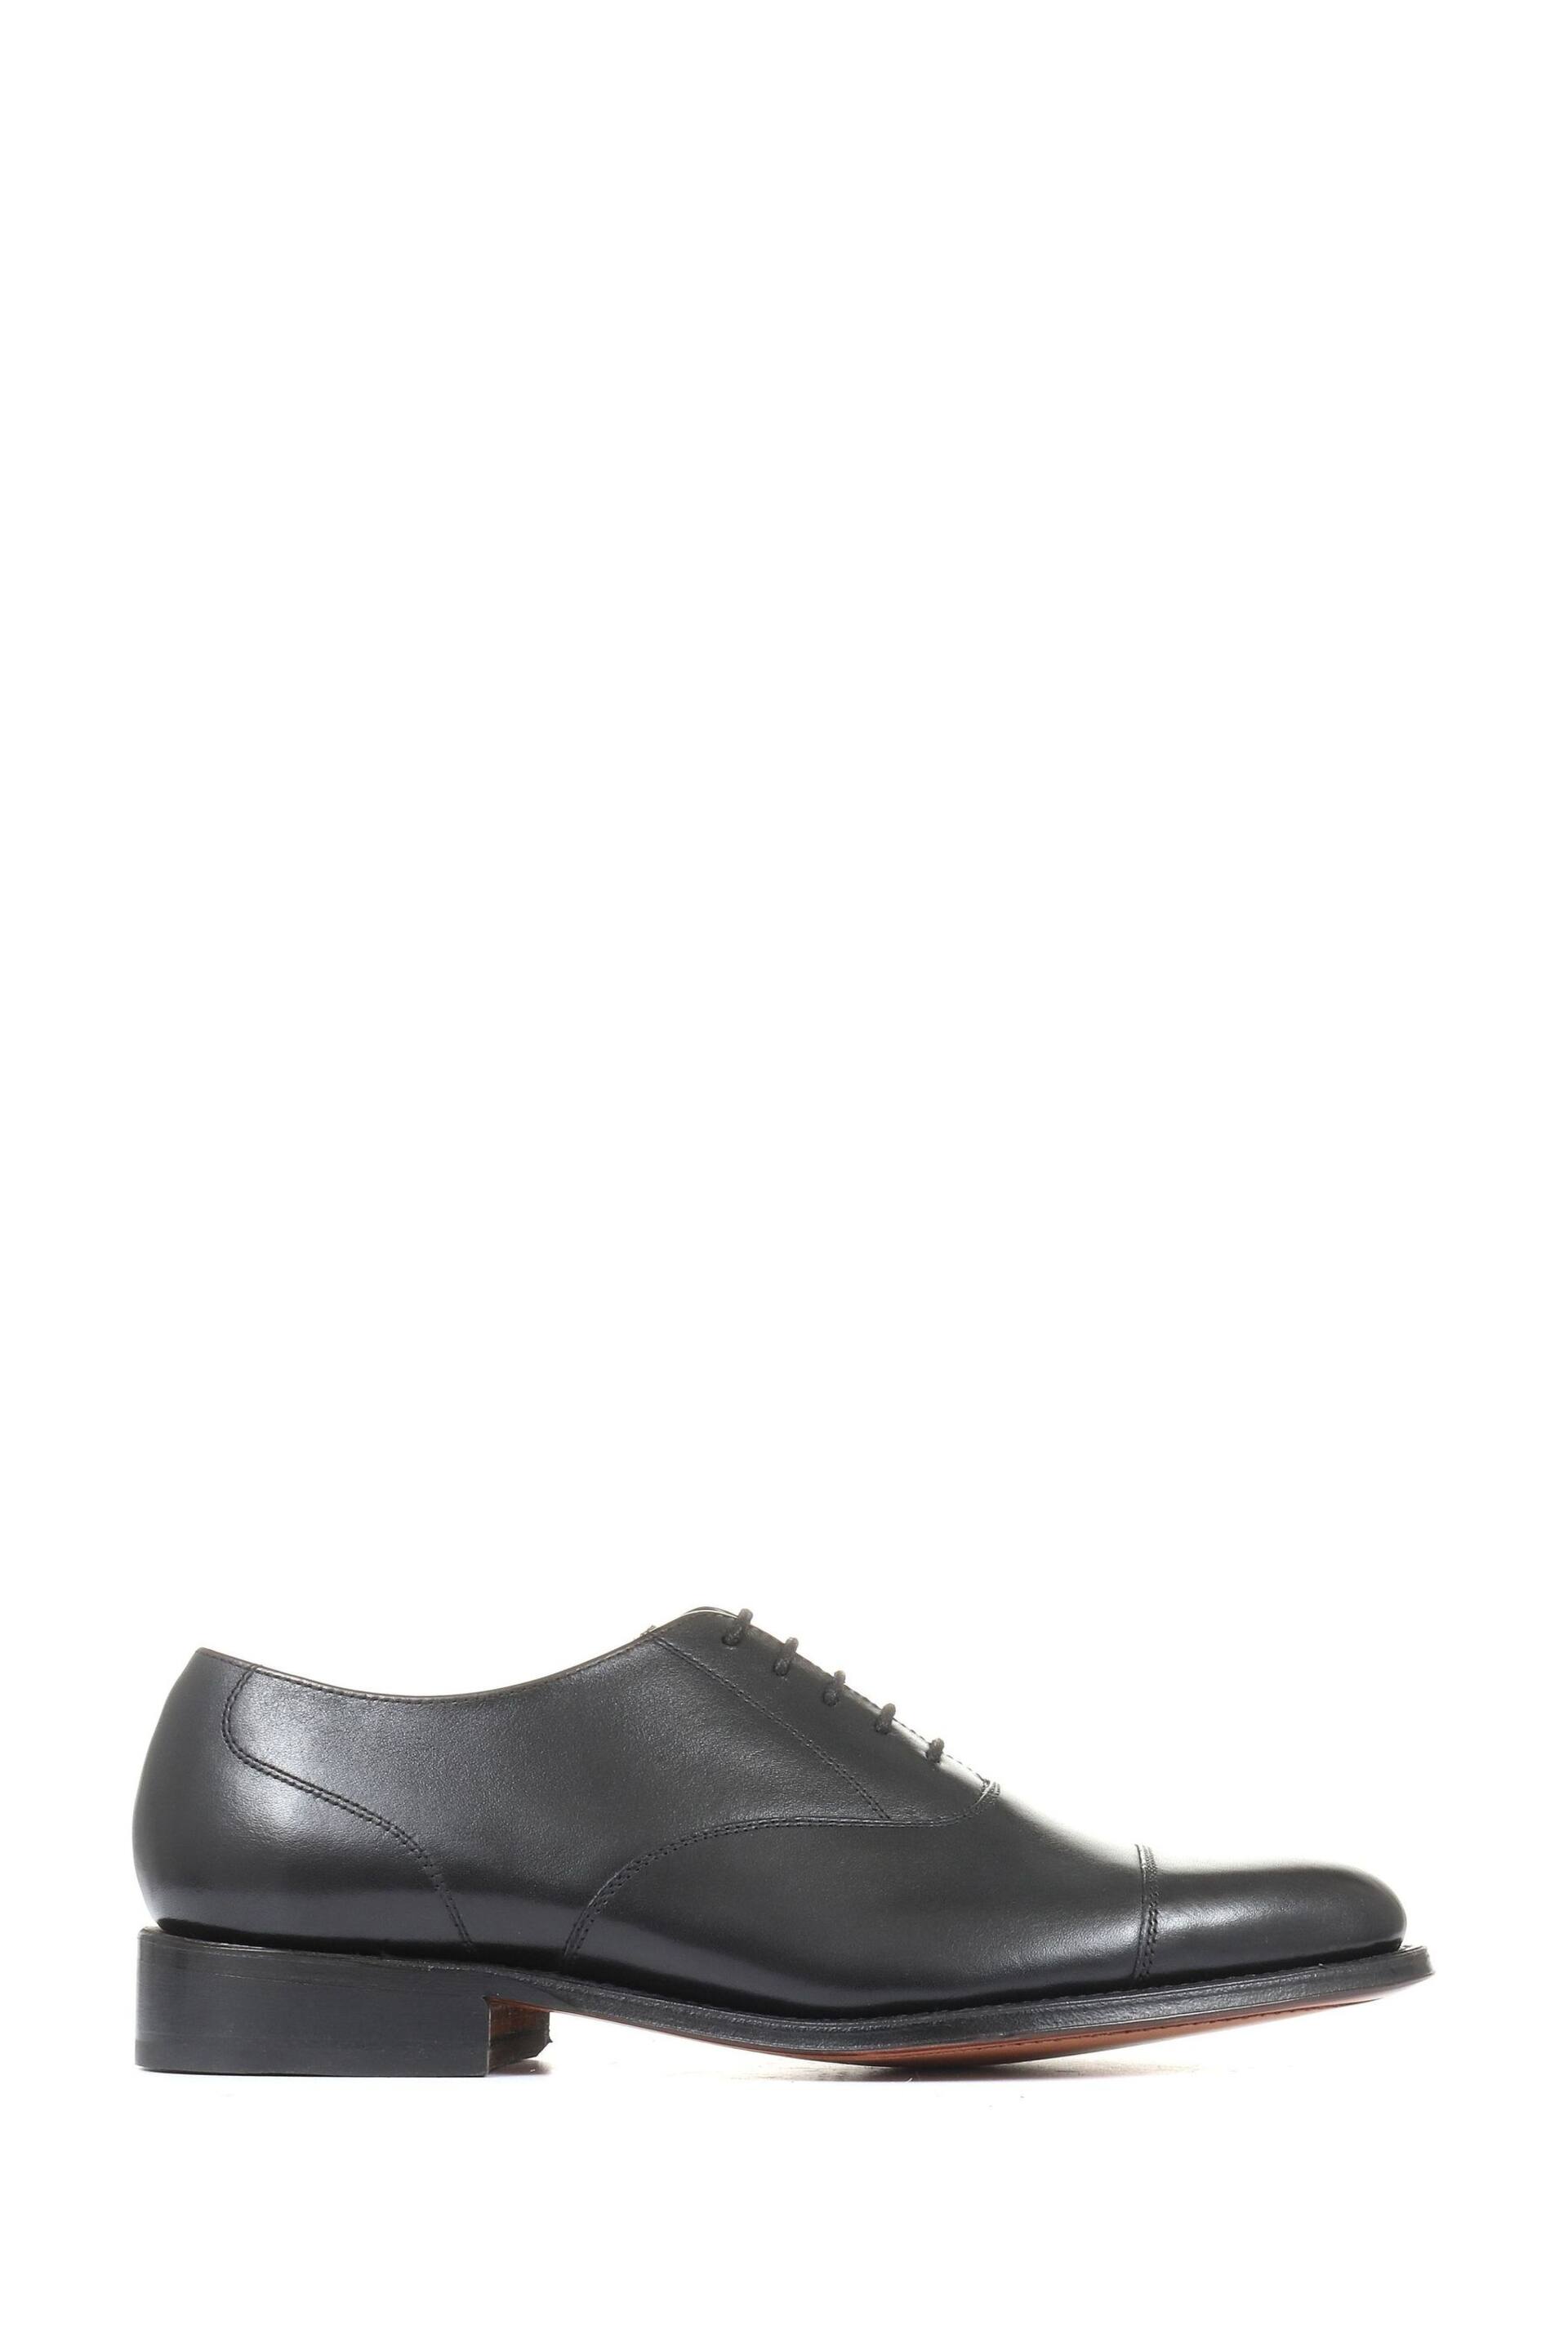 Jones Bootmaker Mens Black Barnet Goodyear Welted Leather Oxford Shoes - Image 1 of 6